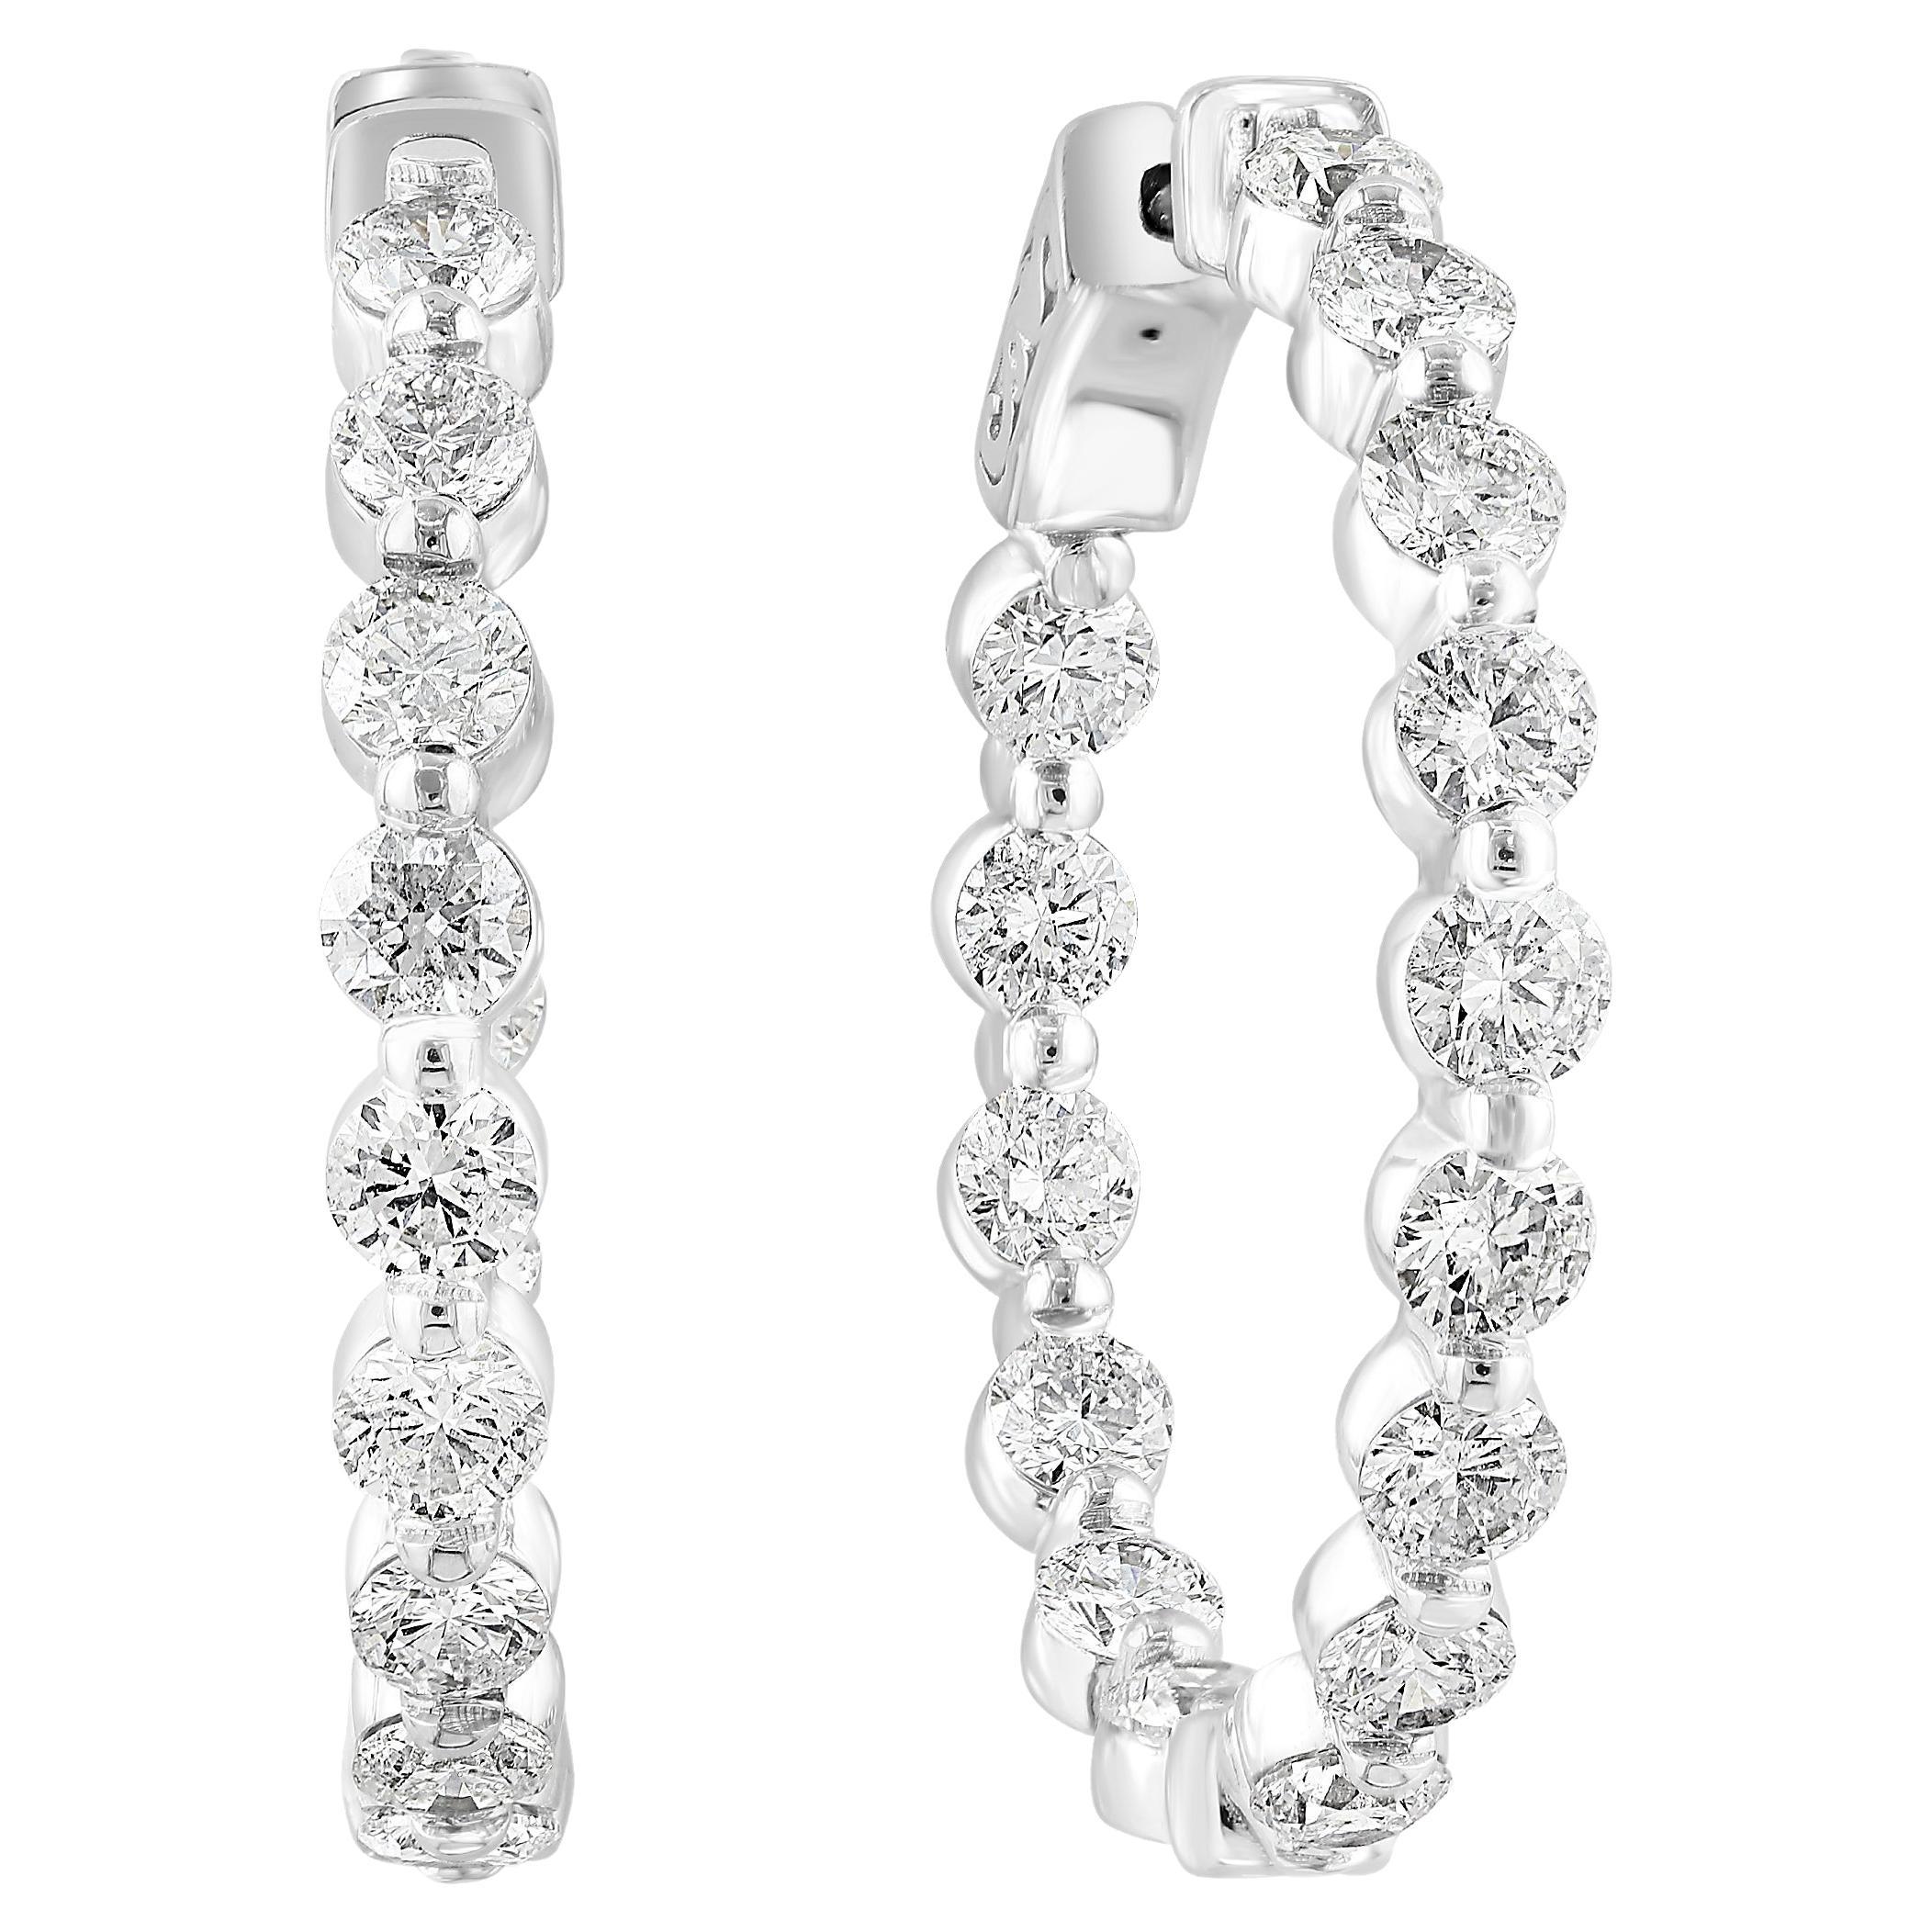 5.11 Carat Brilliant cut Round Diamond Hoop Earrings in 14K White Gold For Sale